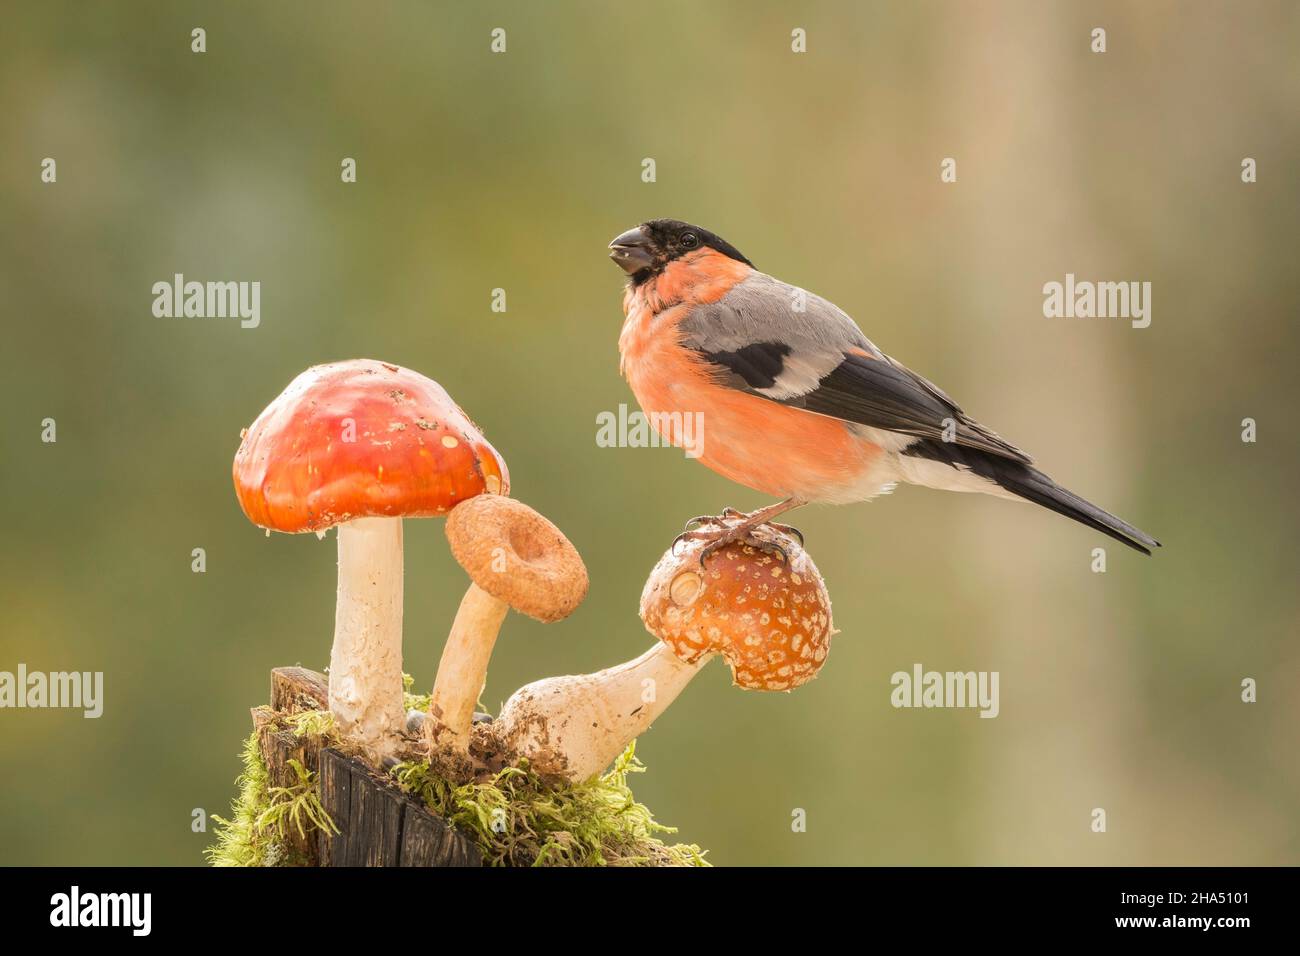 profile of a bullfinch standing on a mushroom Stock Photo